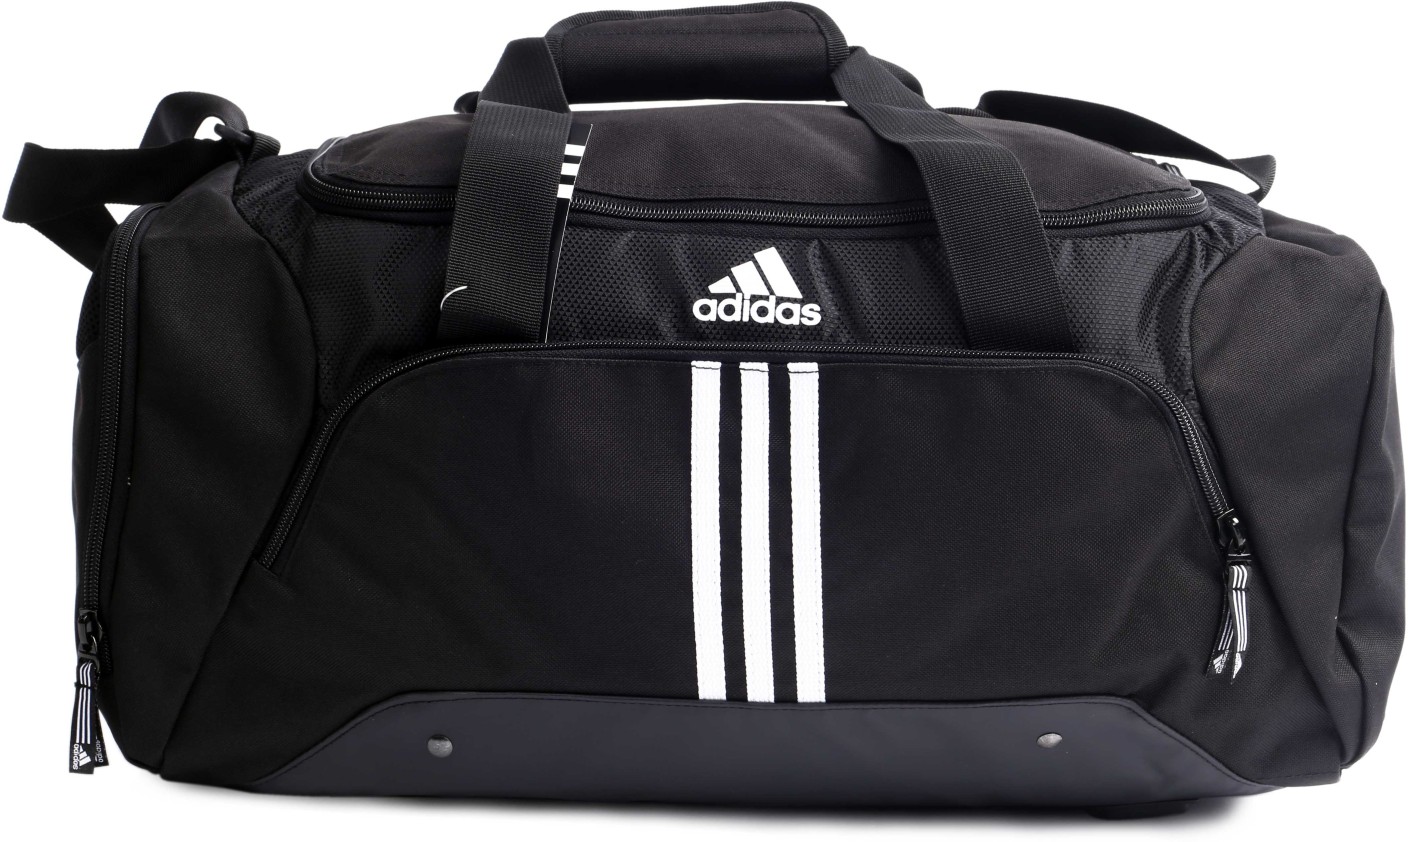 adidas folding travel bag